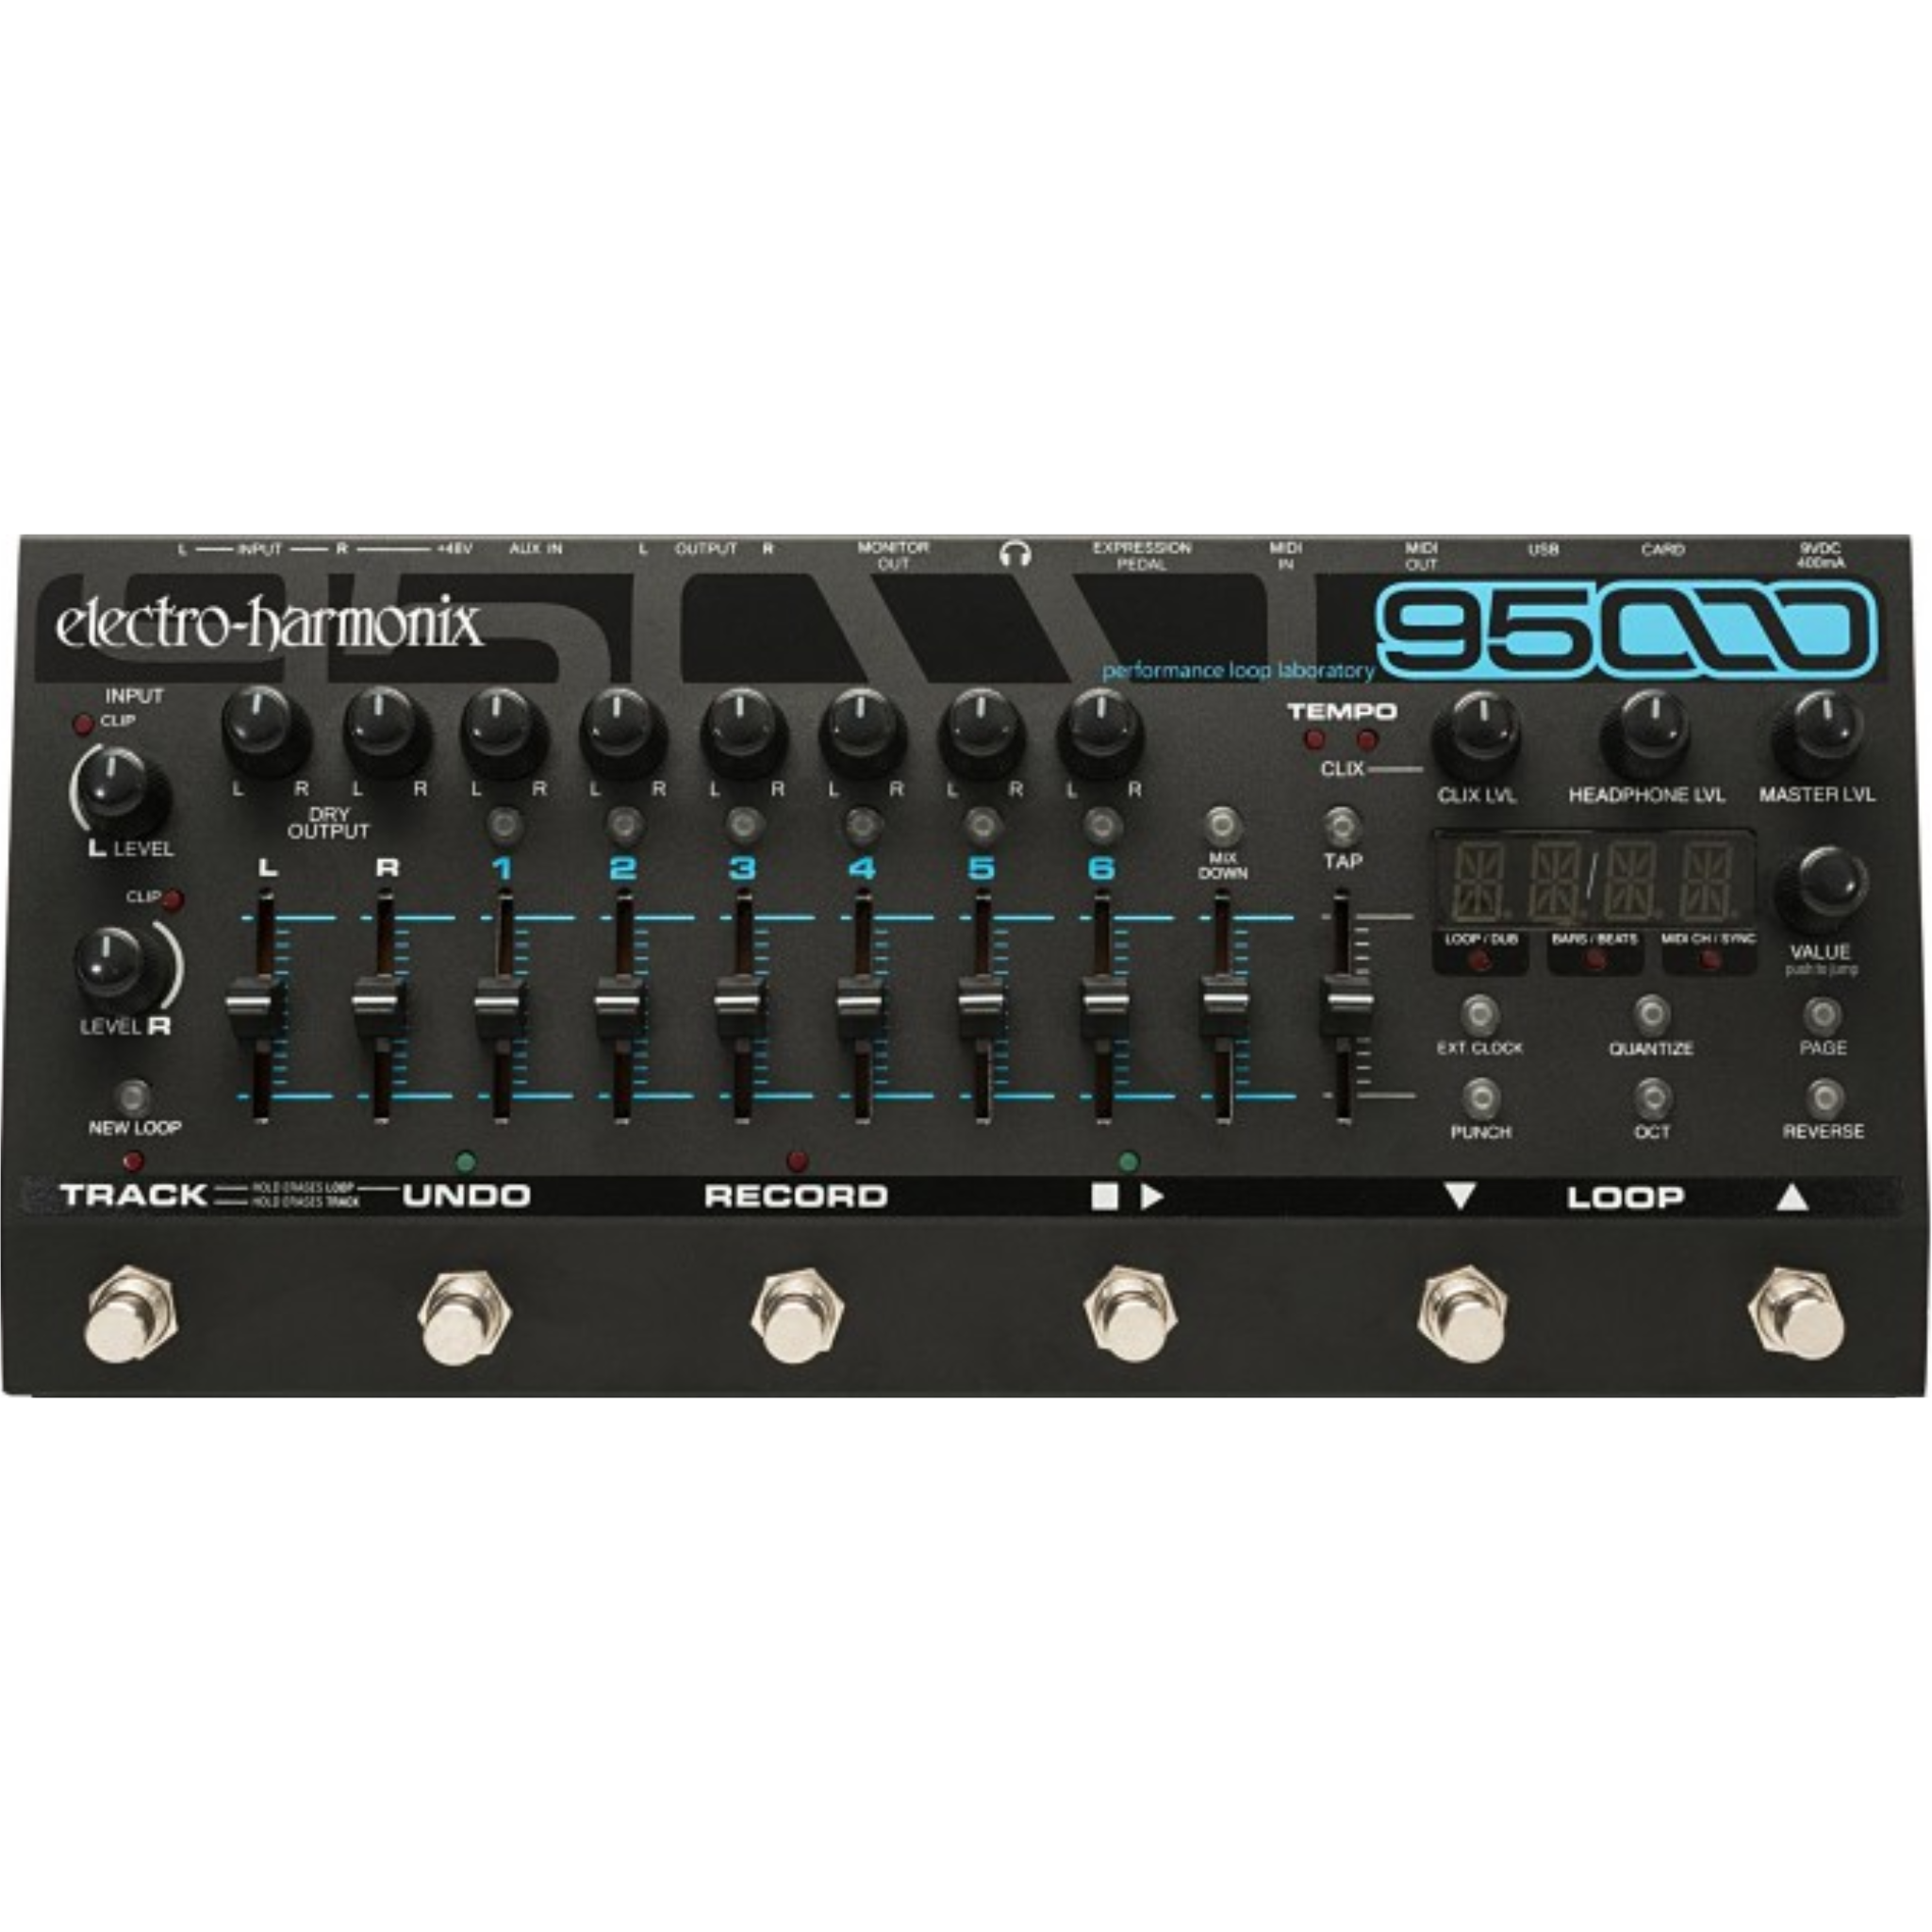 95000　electro-harmonix　(u77108)-